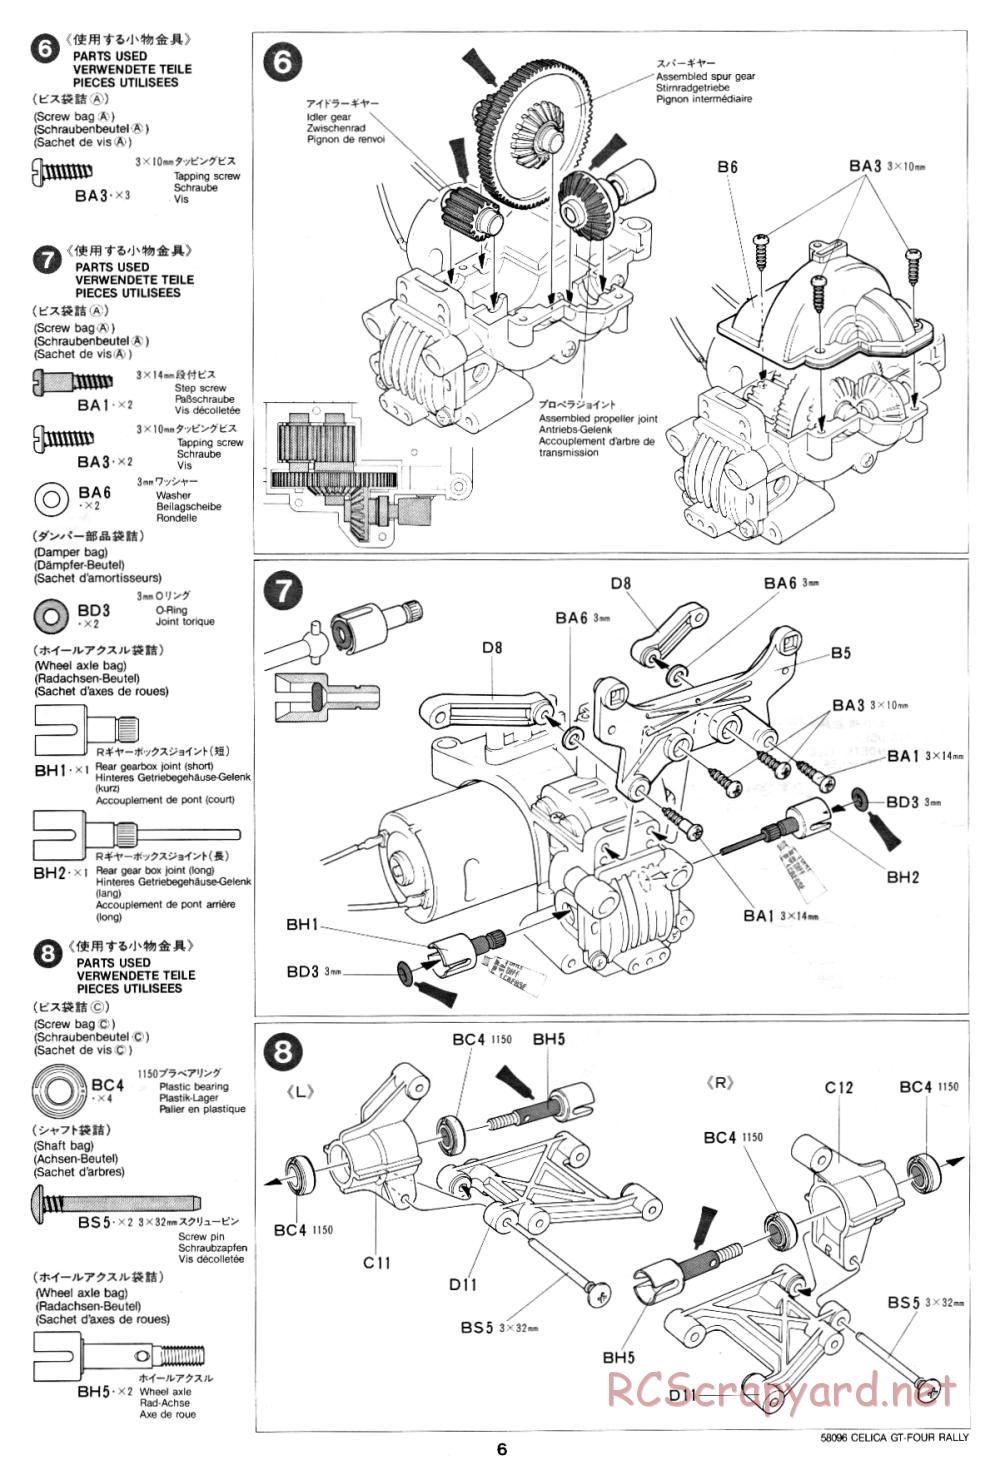 Tamiya - Toyota Celica GT-Four Rally - 58096 - Manual - Page 6